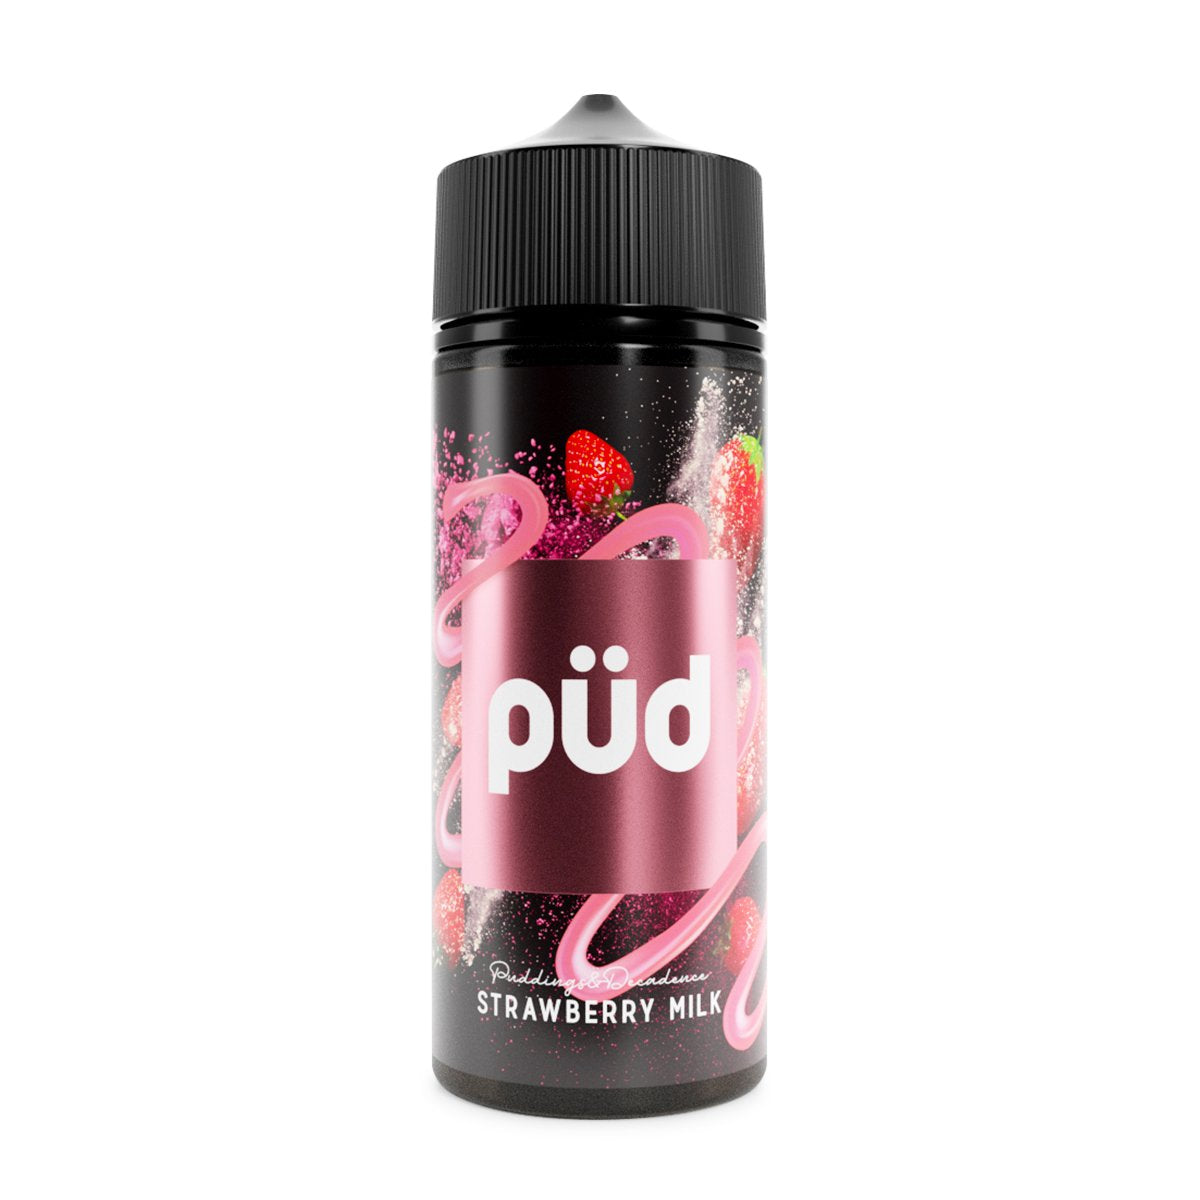 Pud Pudding & Decadence Strawberry Milk 0mg 100ml Shortfill E-Liquid